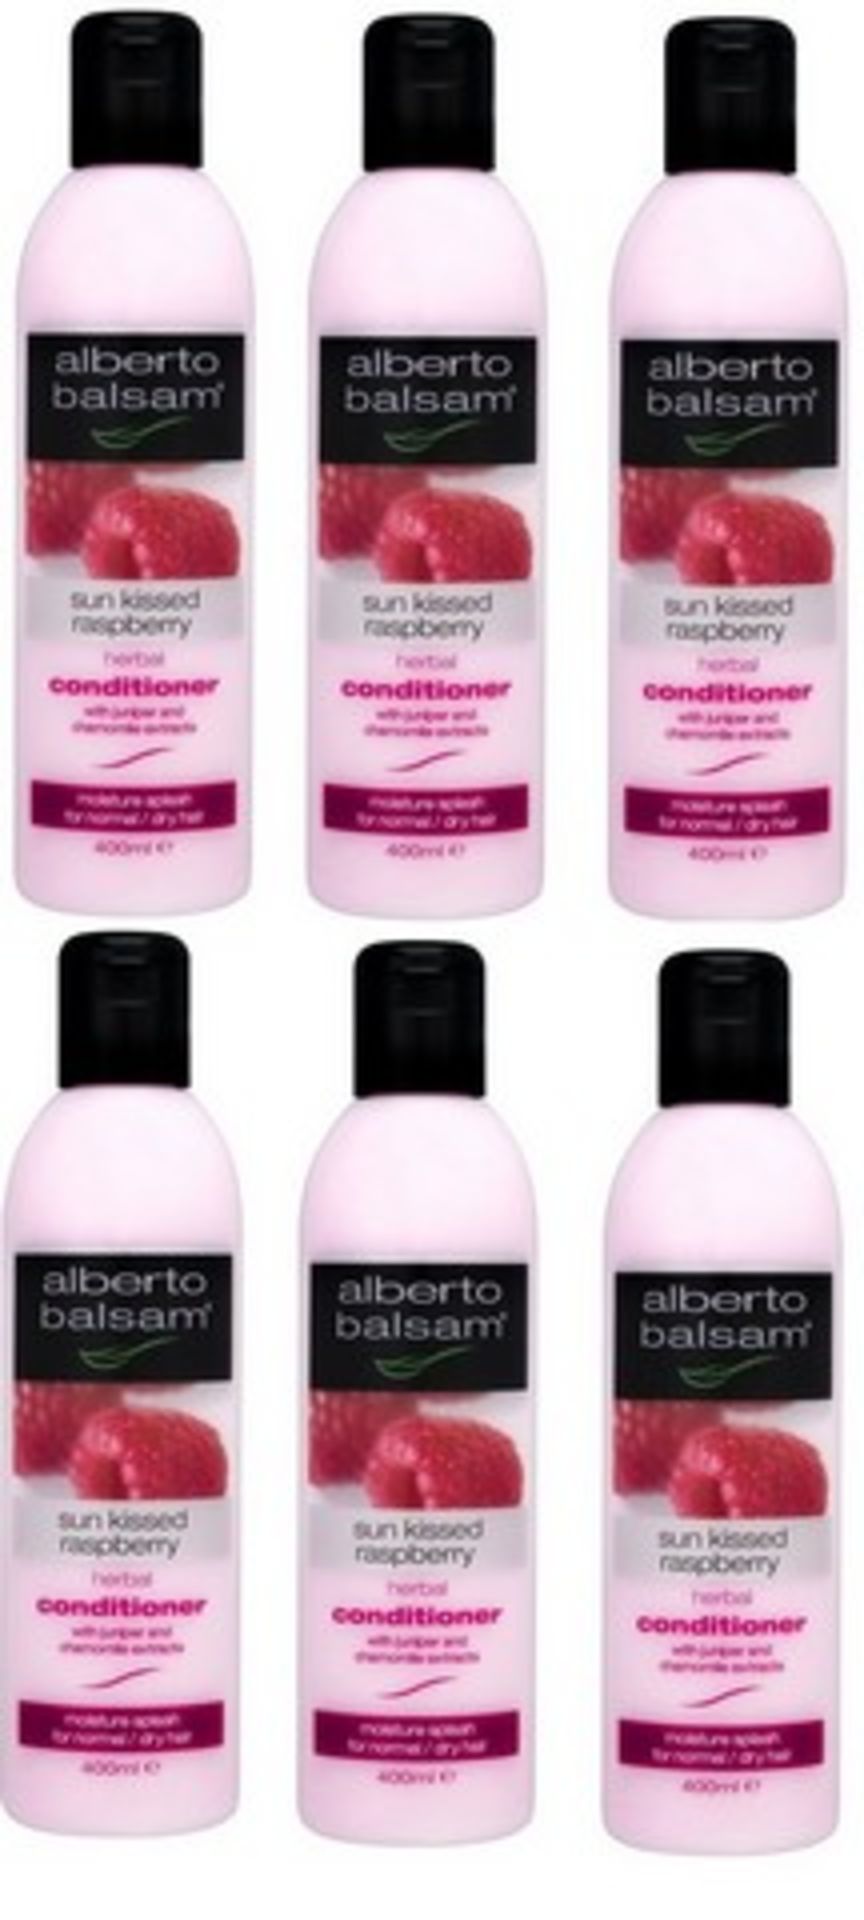 + VAT Brand New A Lot Of Six 400ml Alberto Balsam Sun Kissed Raspberry Conditioner